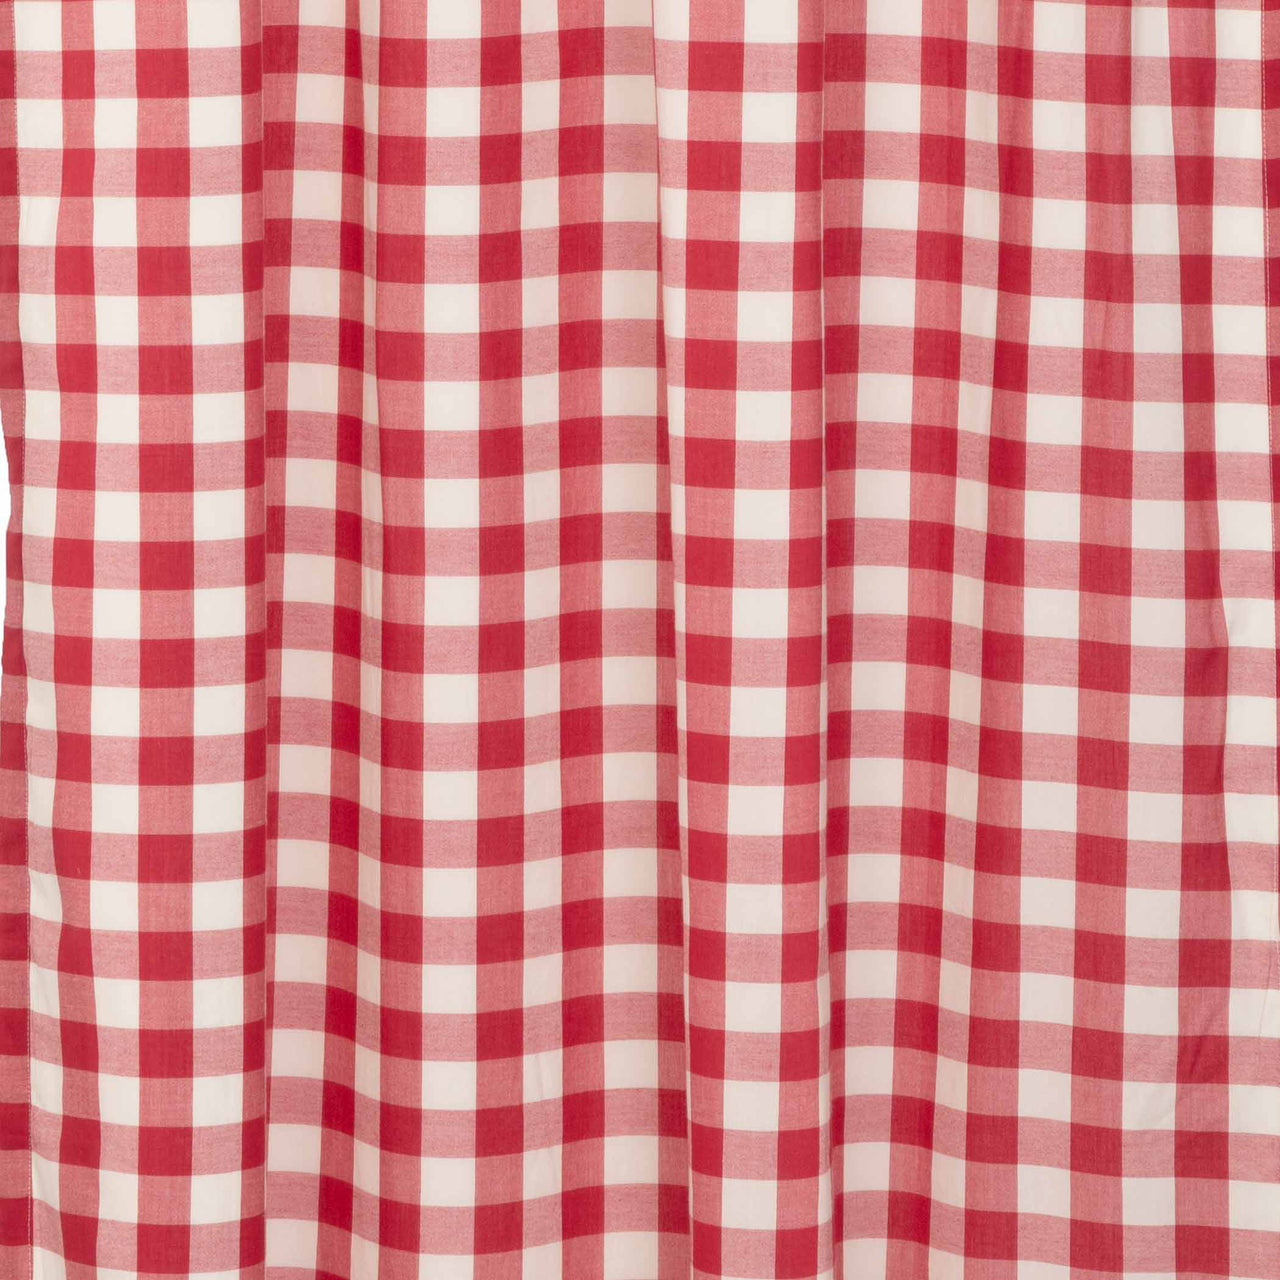 Annie Buffalo Black/Red Check Ruffled Panel Curtain Set of 2 84x40